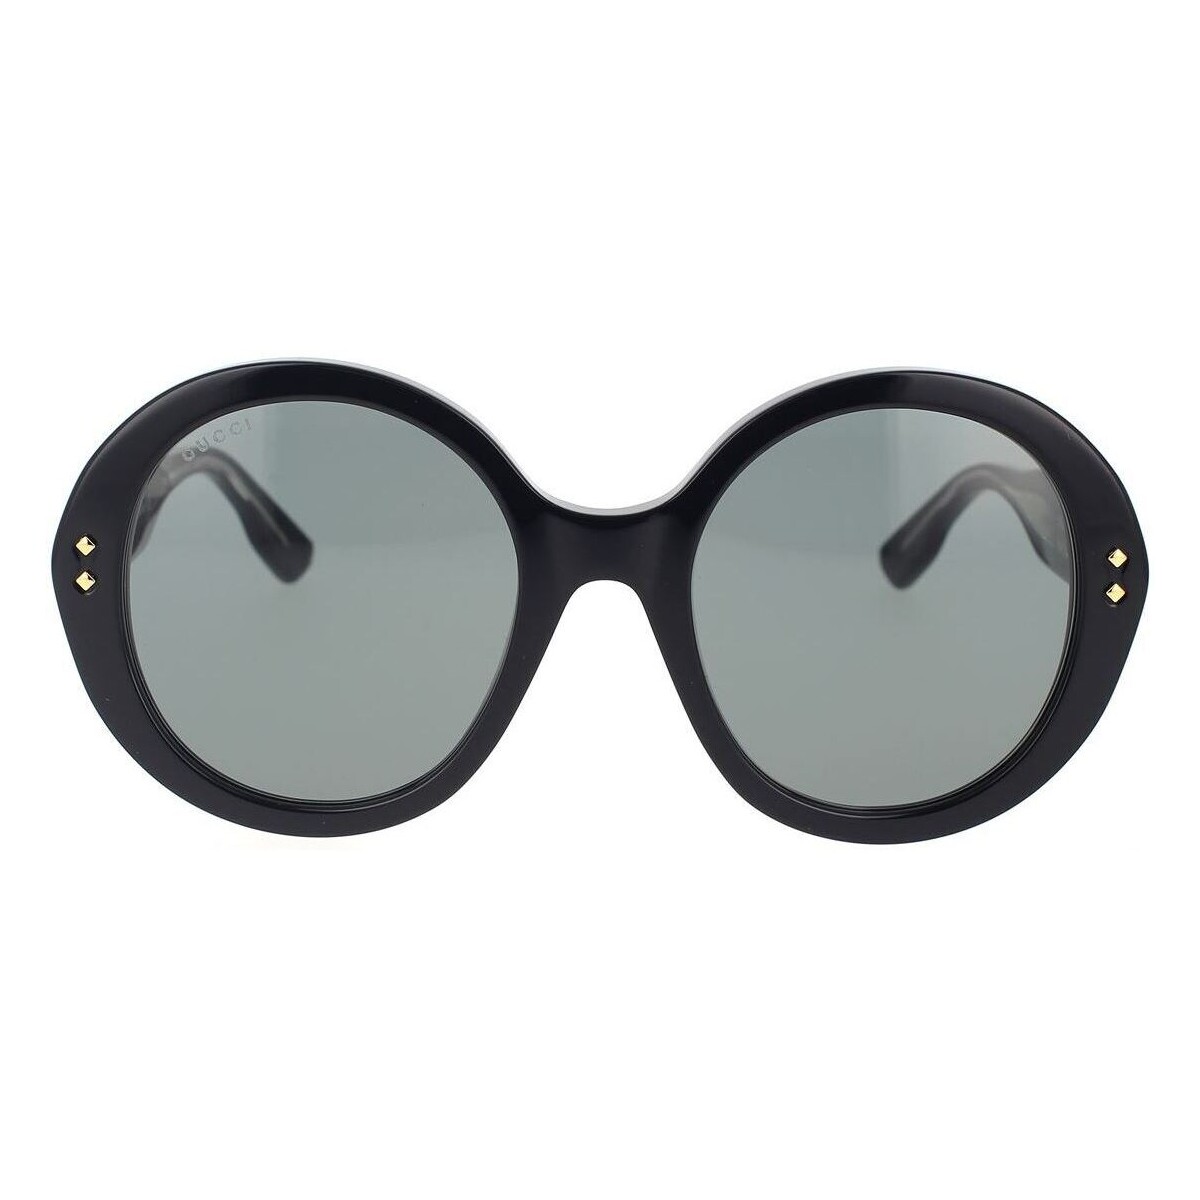 Relojes & Joyas Mujer Gafas de sol Gucci Occhiali da Sole  GG1081S 001 Negro